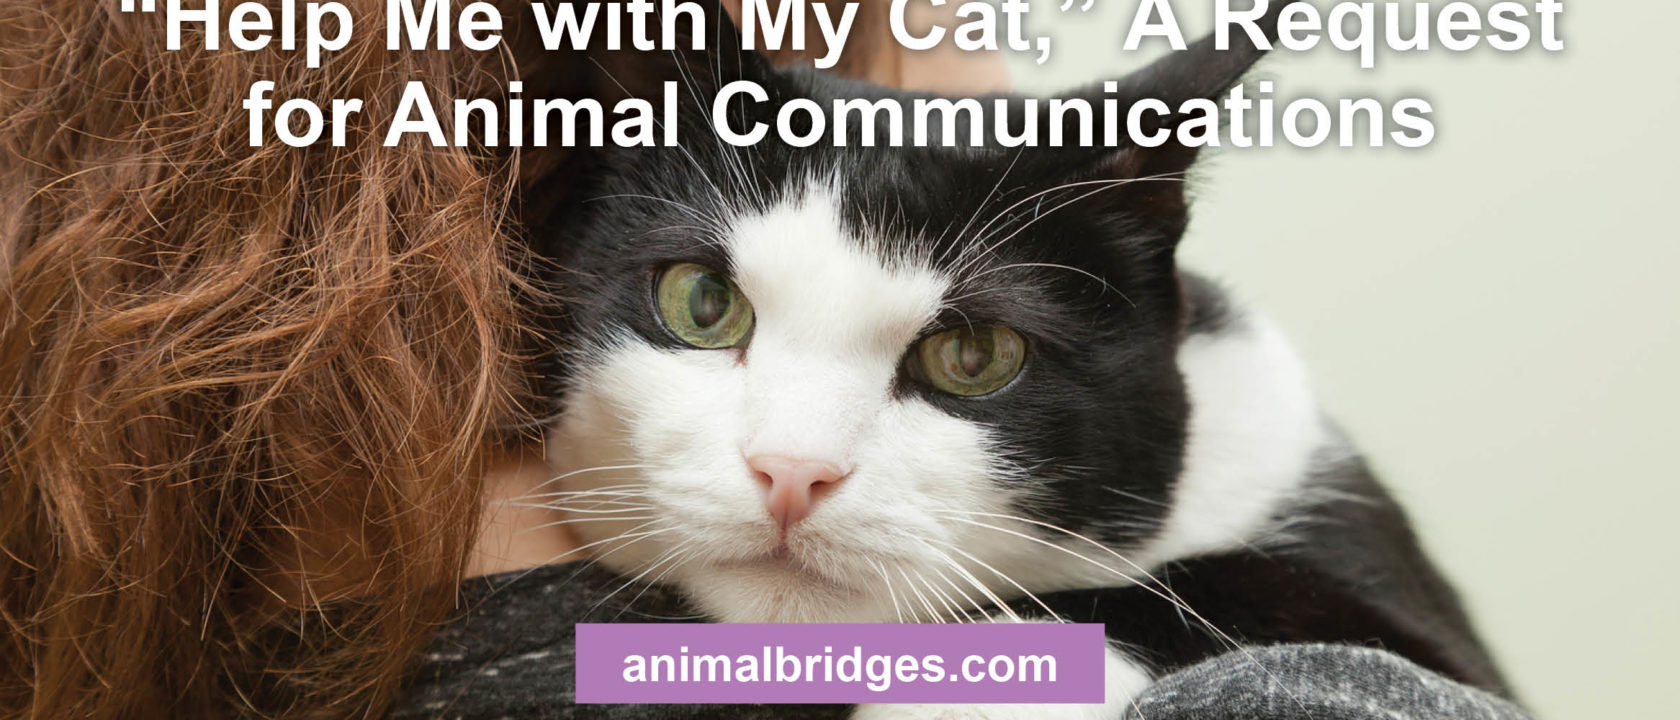 Cat behavior and animal communication